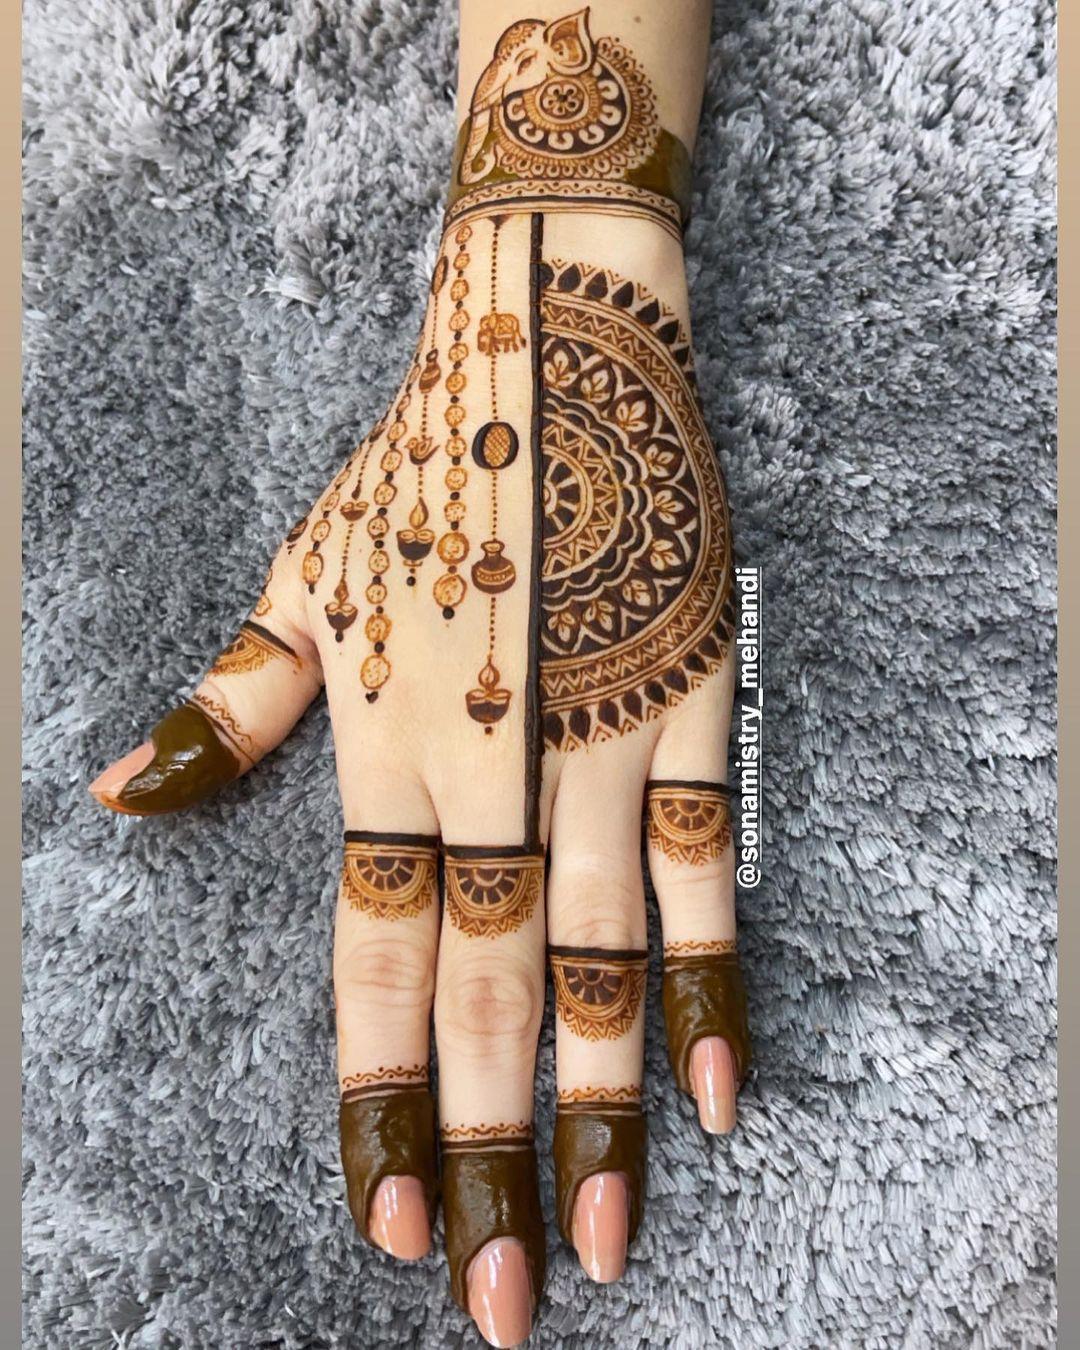 easy simple mehndi henna designs for hands|matroj mehndi designs - YouTube